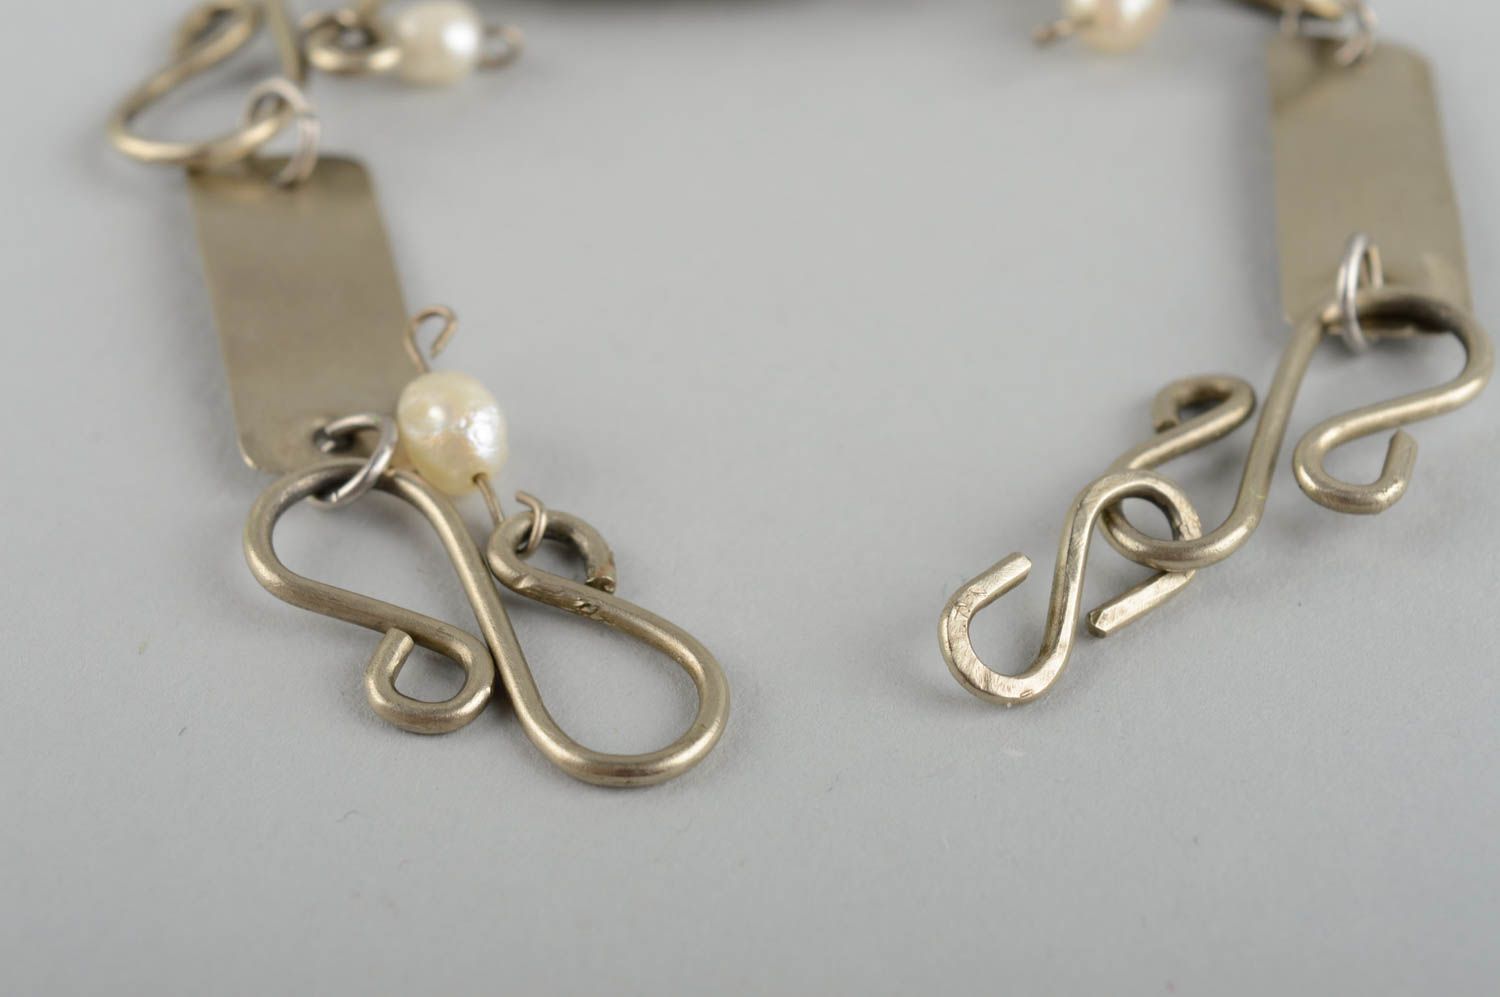 Pearl bracelet metal bracelet handmade jewelry designer accessories gift for her photo 2